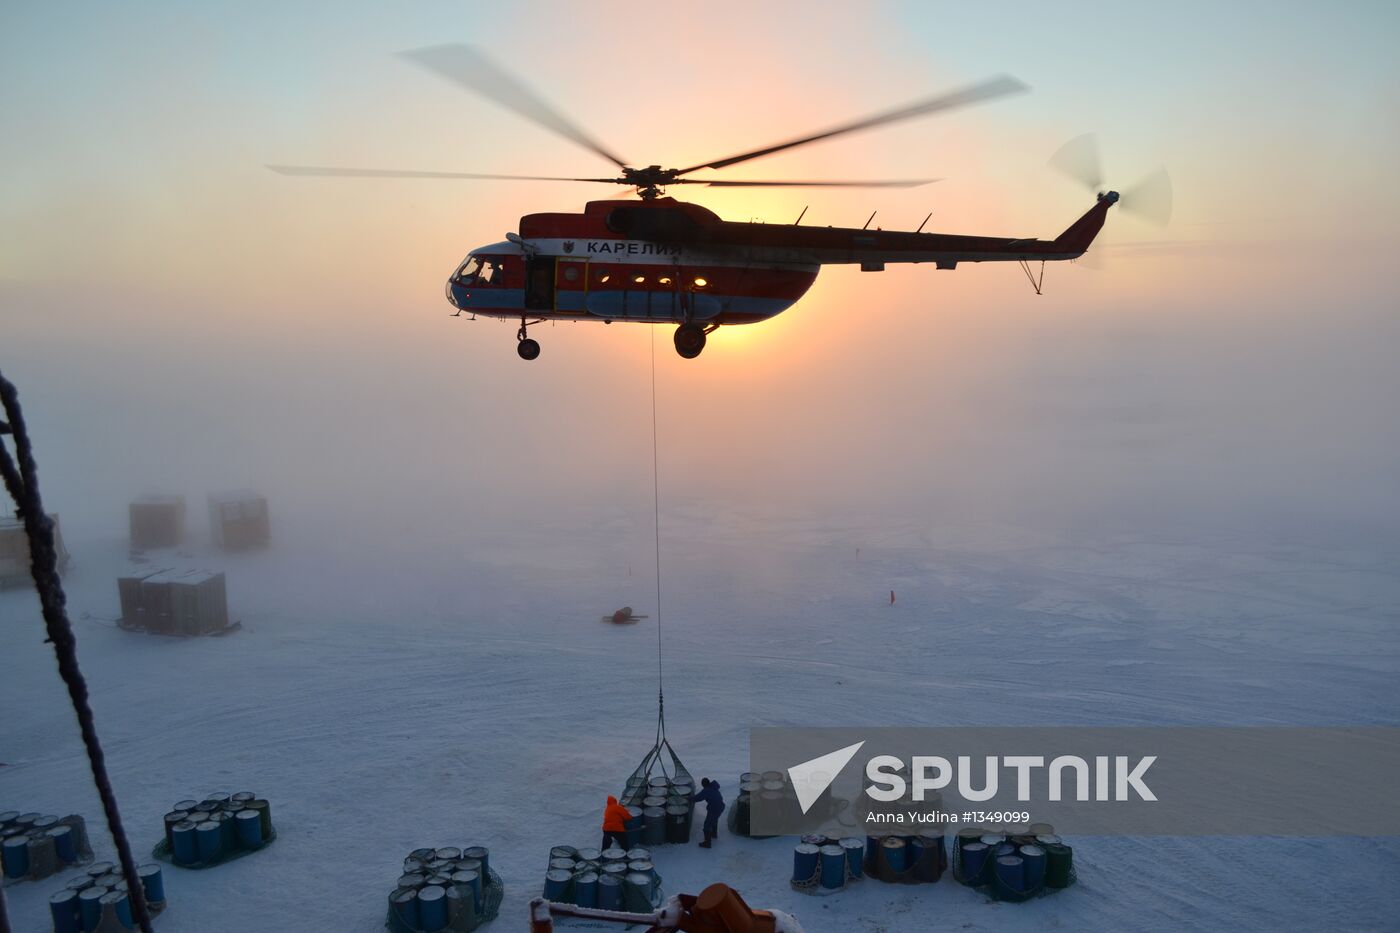 Polar explorers begin deploying new drifting station SP-40